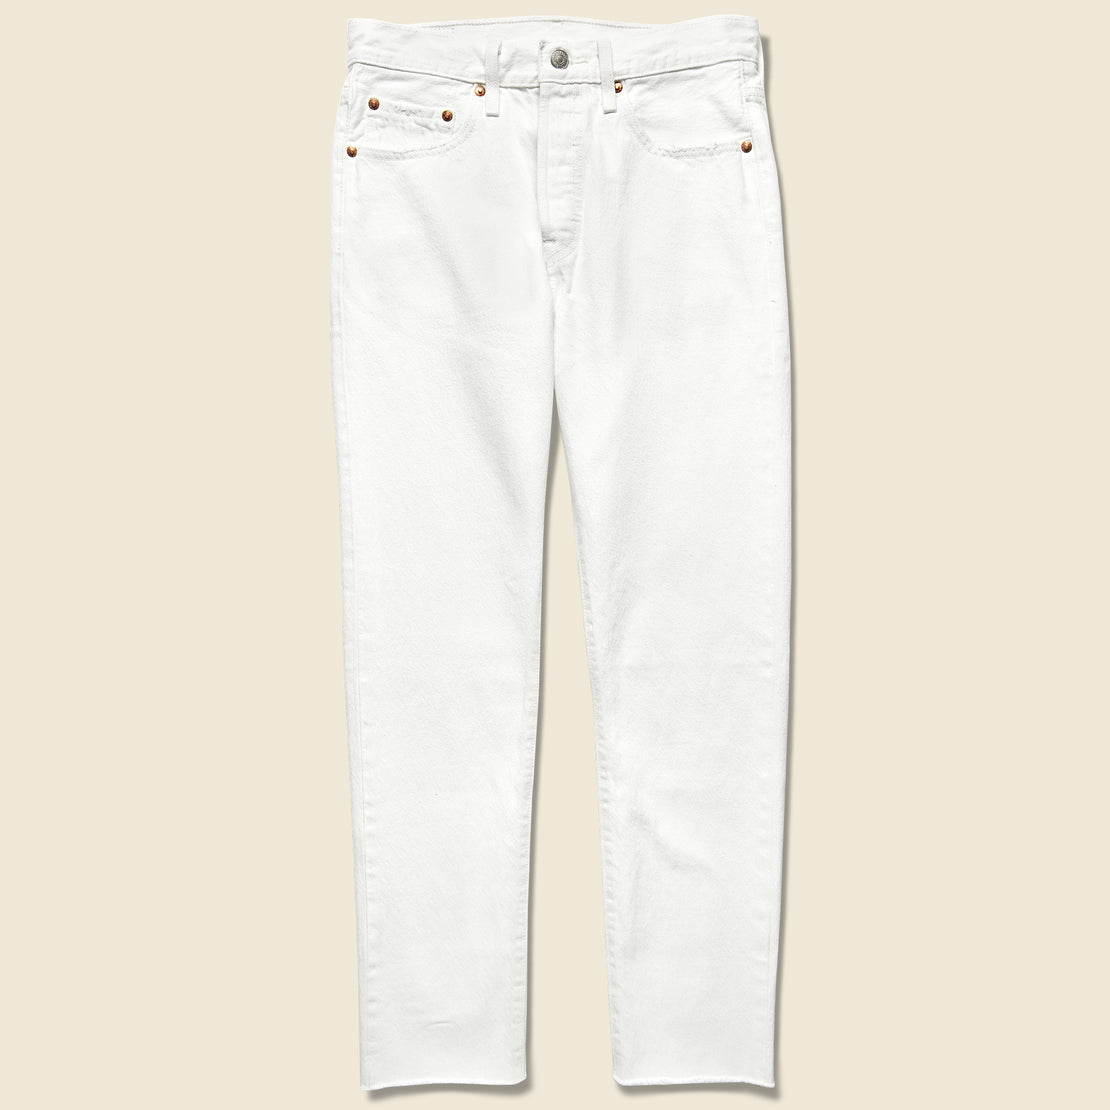 Levis Premium 501 Skinny Jean - Crystalline White